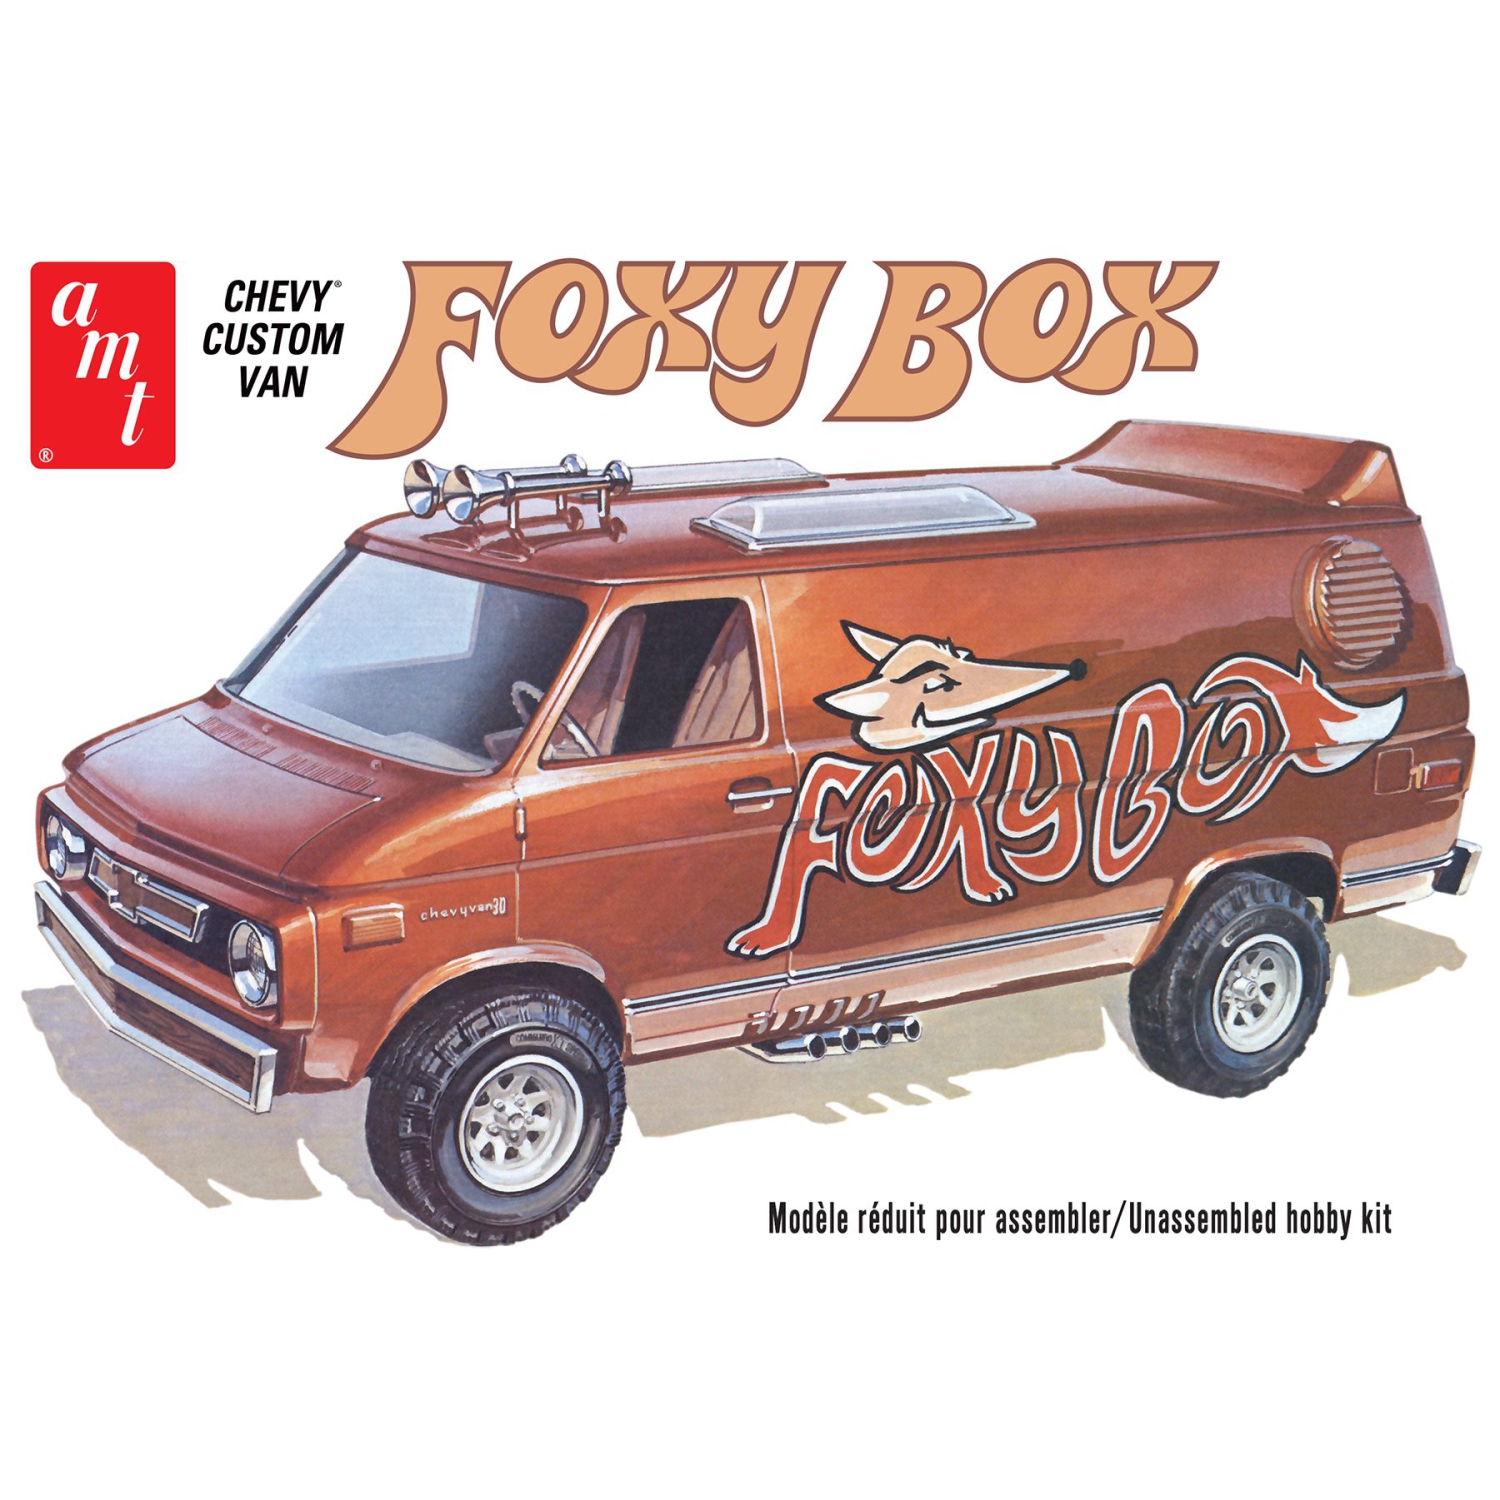 1975 Chevy Custom Van Foxy Box (AMT1265) 1:25 Scale Car Plastic Model Kit